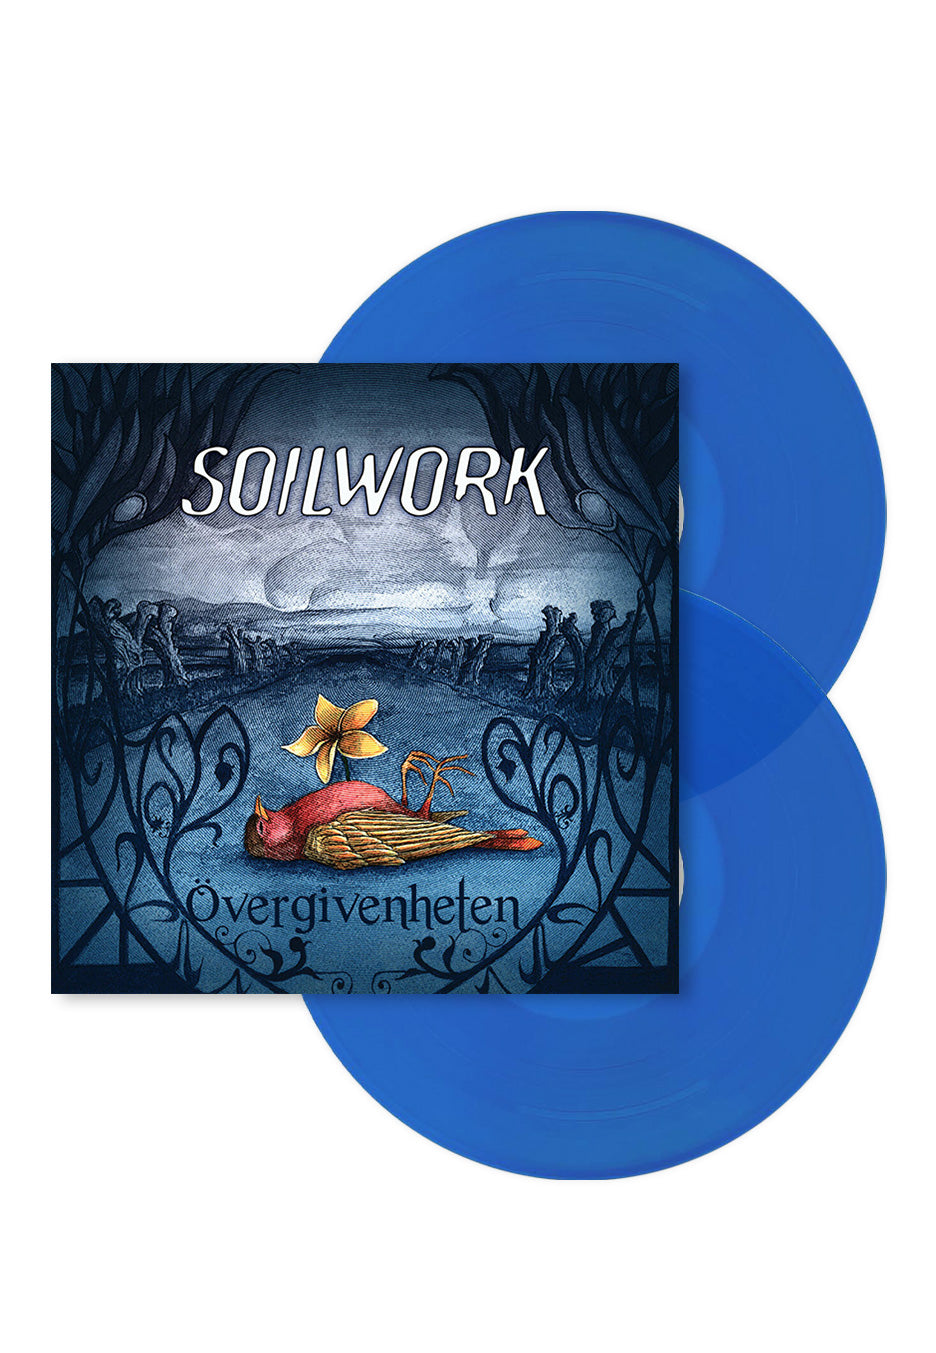 Soilwork - Övergivenheten Ltd. Transparent Blue - Colored 2 Vinyl